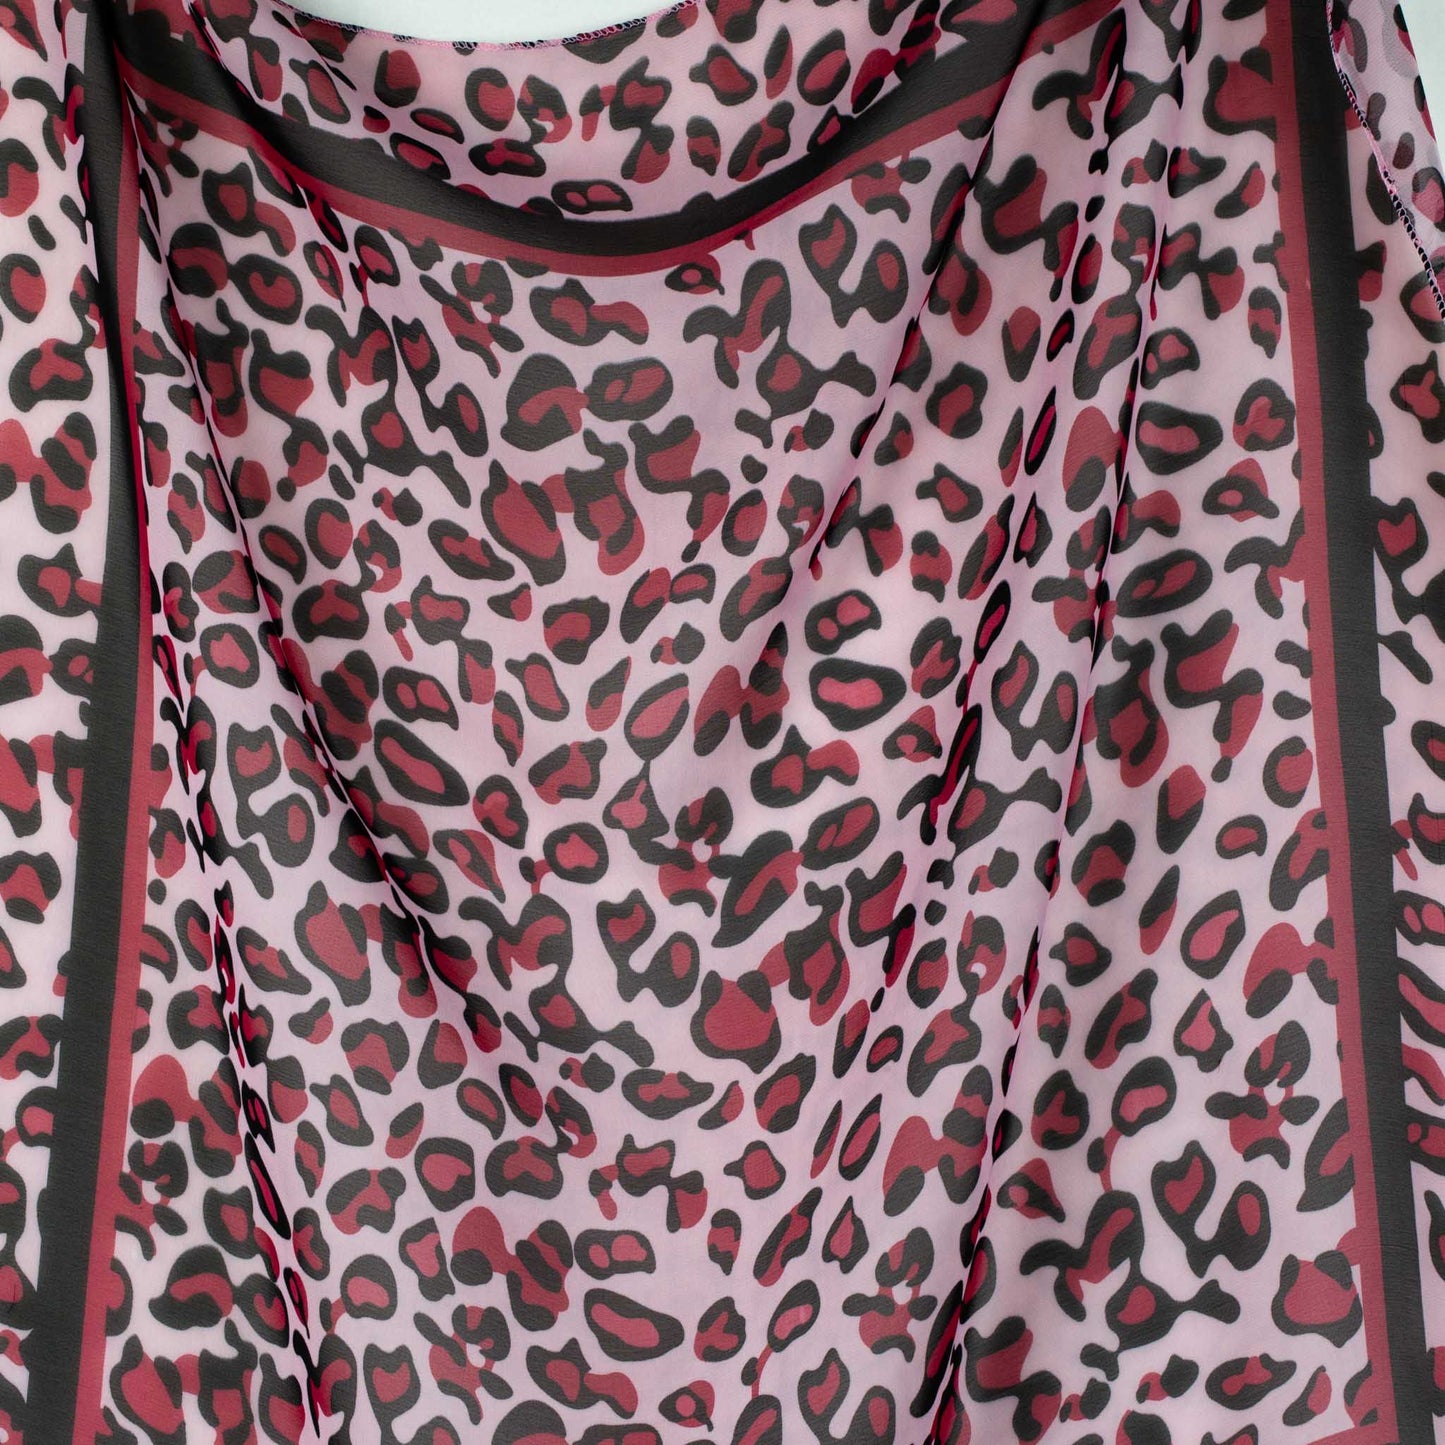 Eșarfă damă din mătase cu animal print și dungi, 65 x 65 cm - Roz